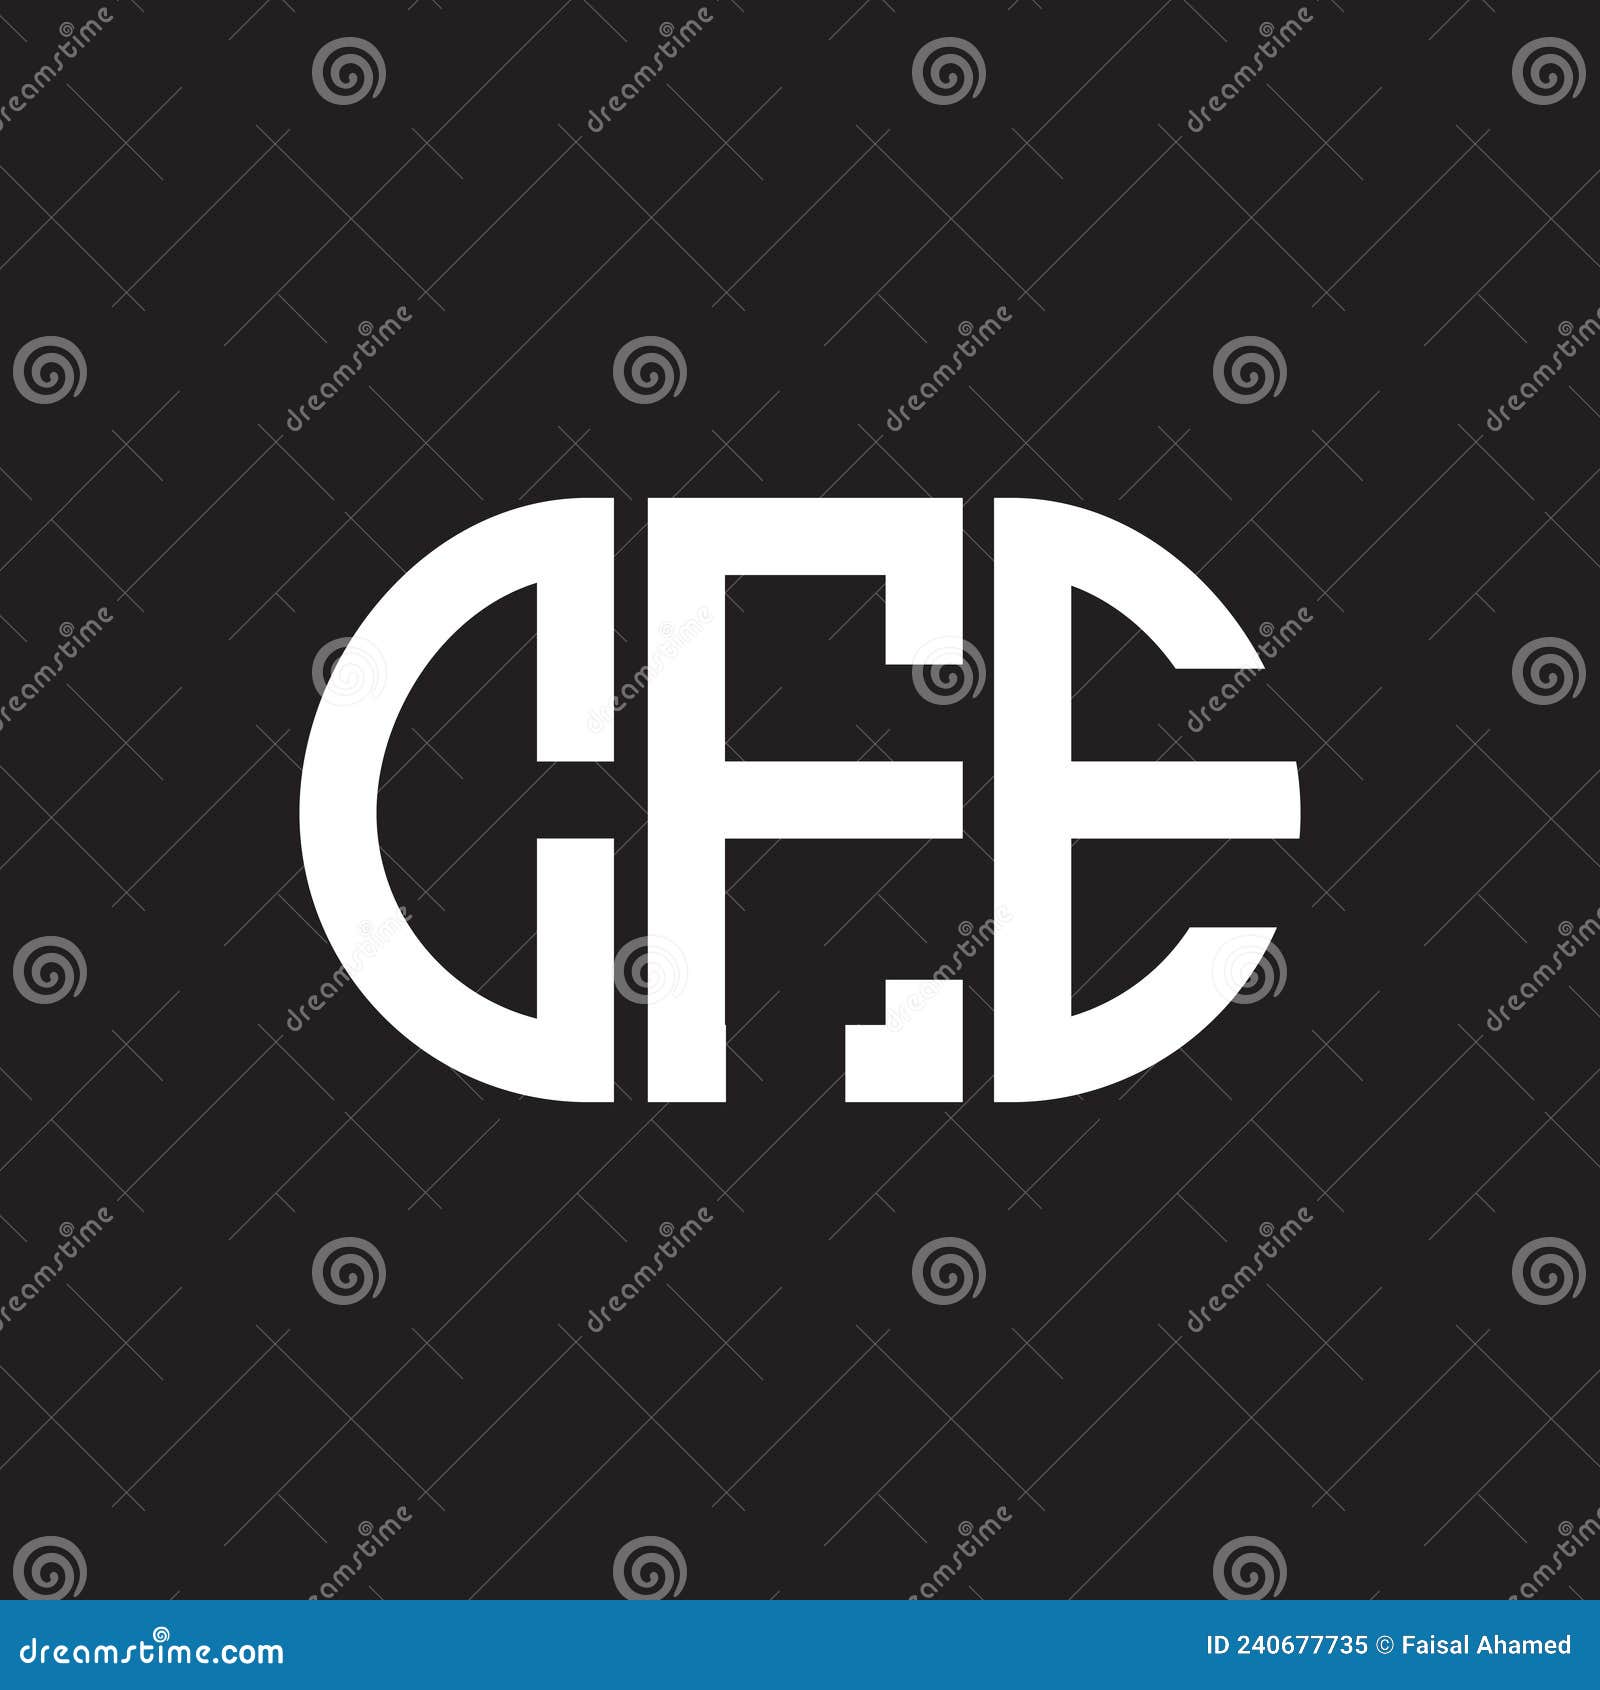 cfe letter logo  on black background. cfe creative initials letter logo concept. cfe letter 